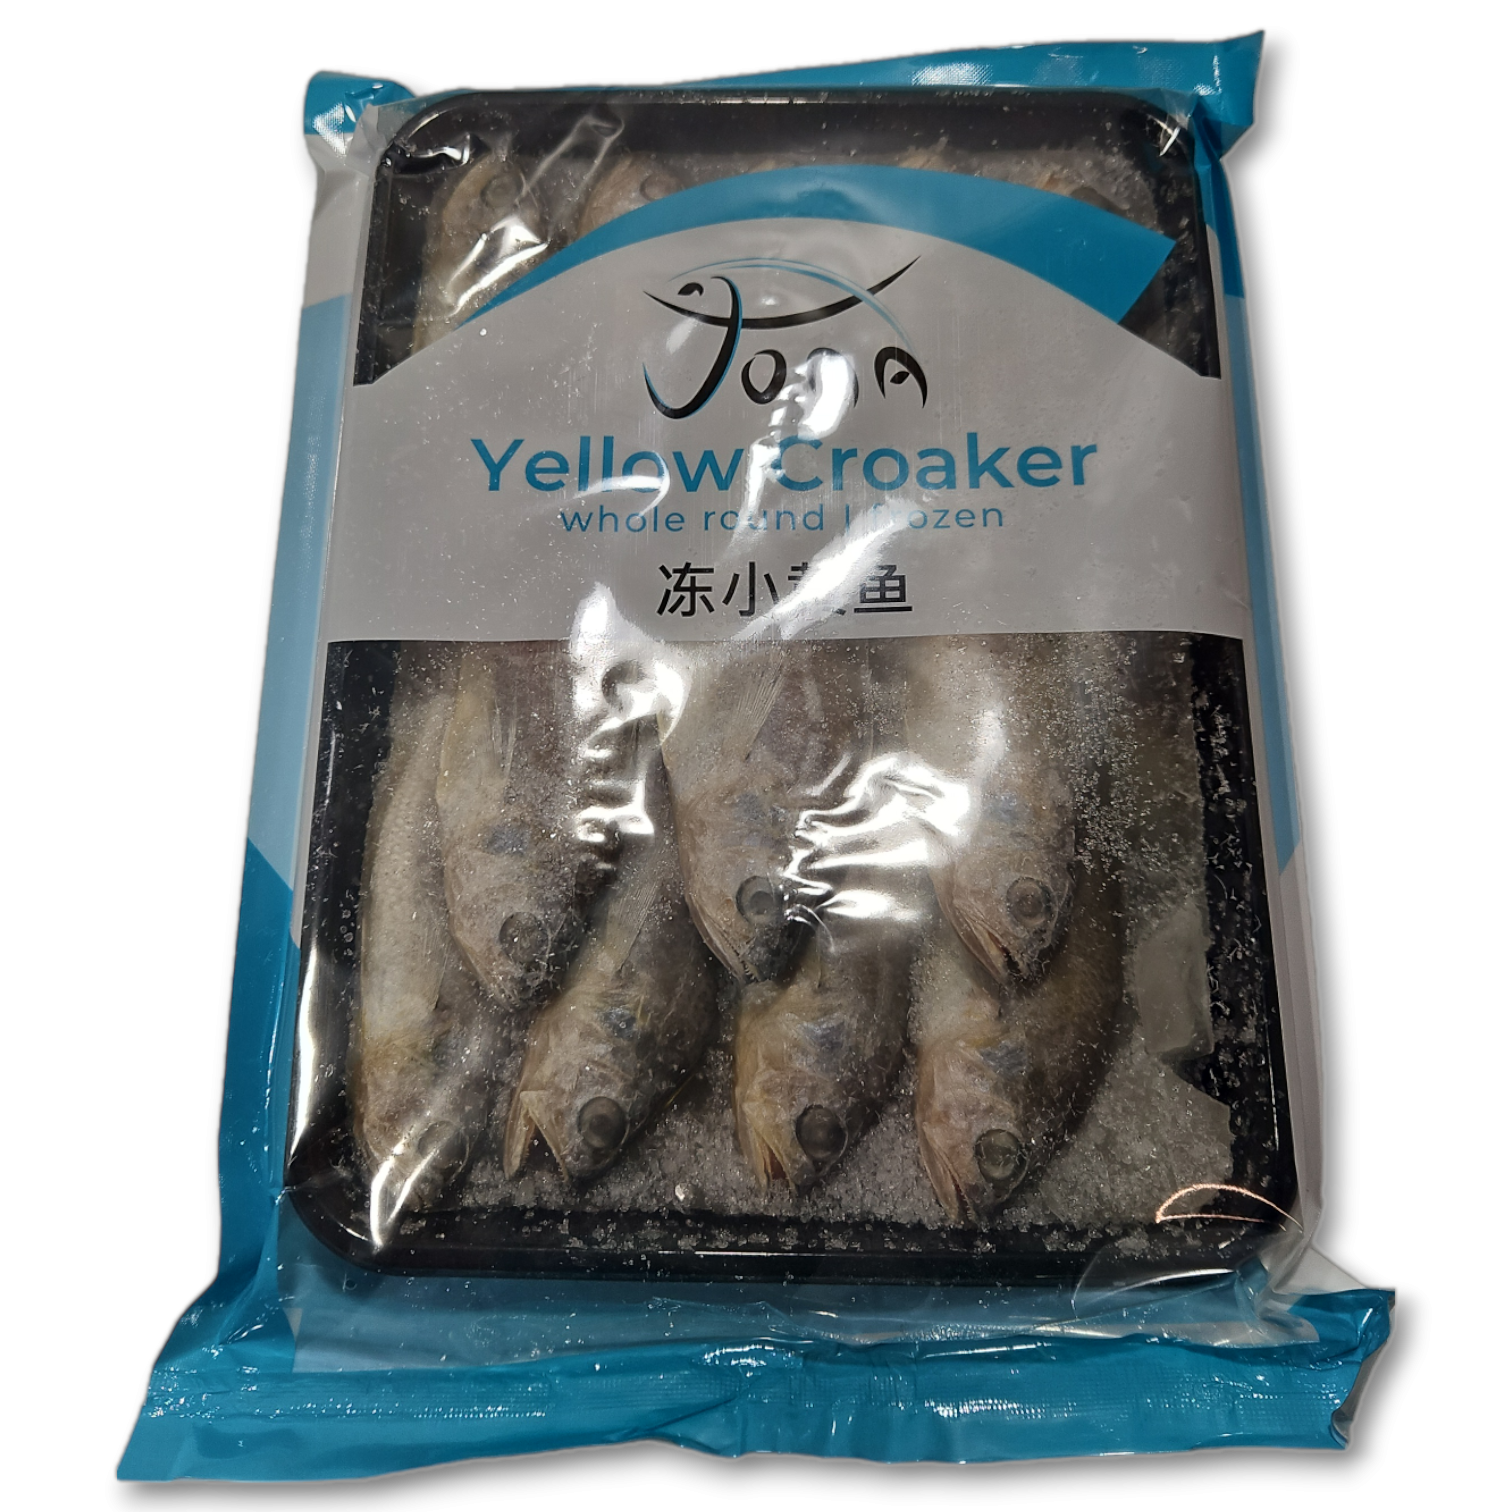 Jona Yellow Croakers Wild WR 12 pcs 10x1 Kg Tray IQF 20%-CN